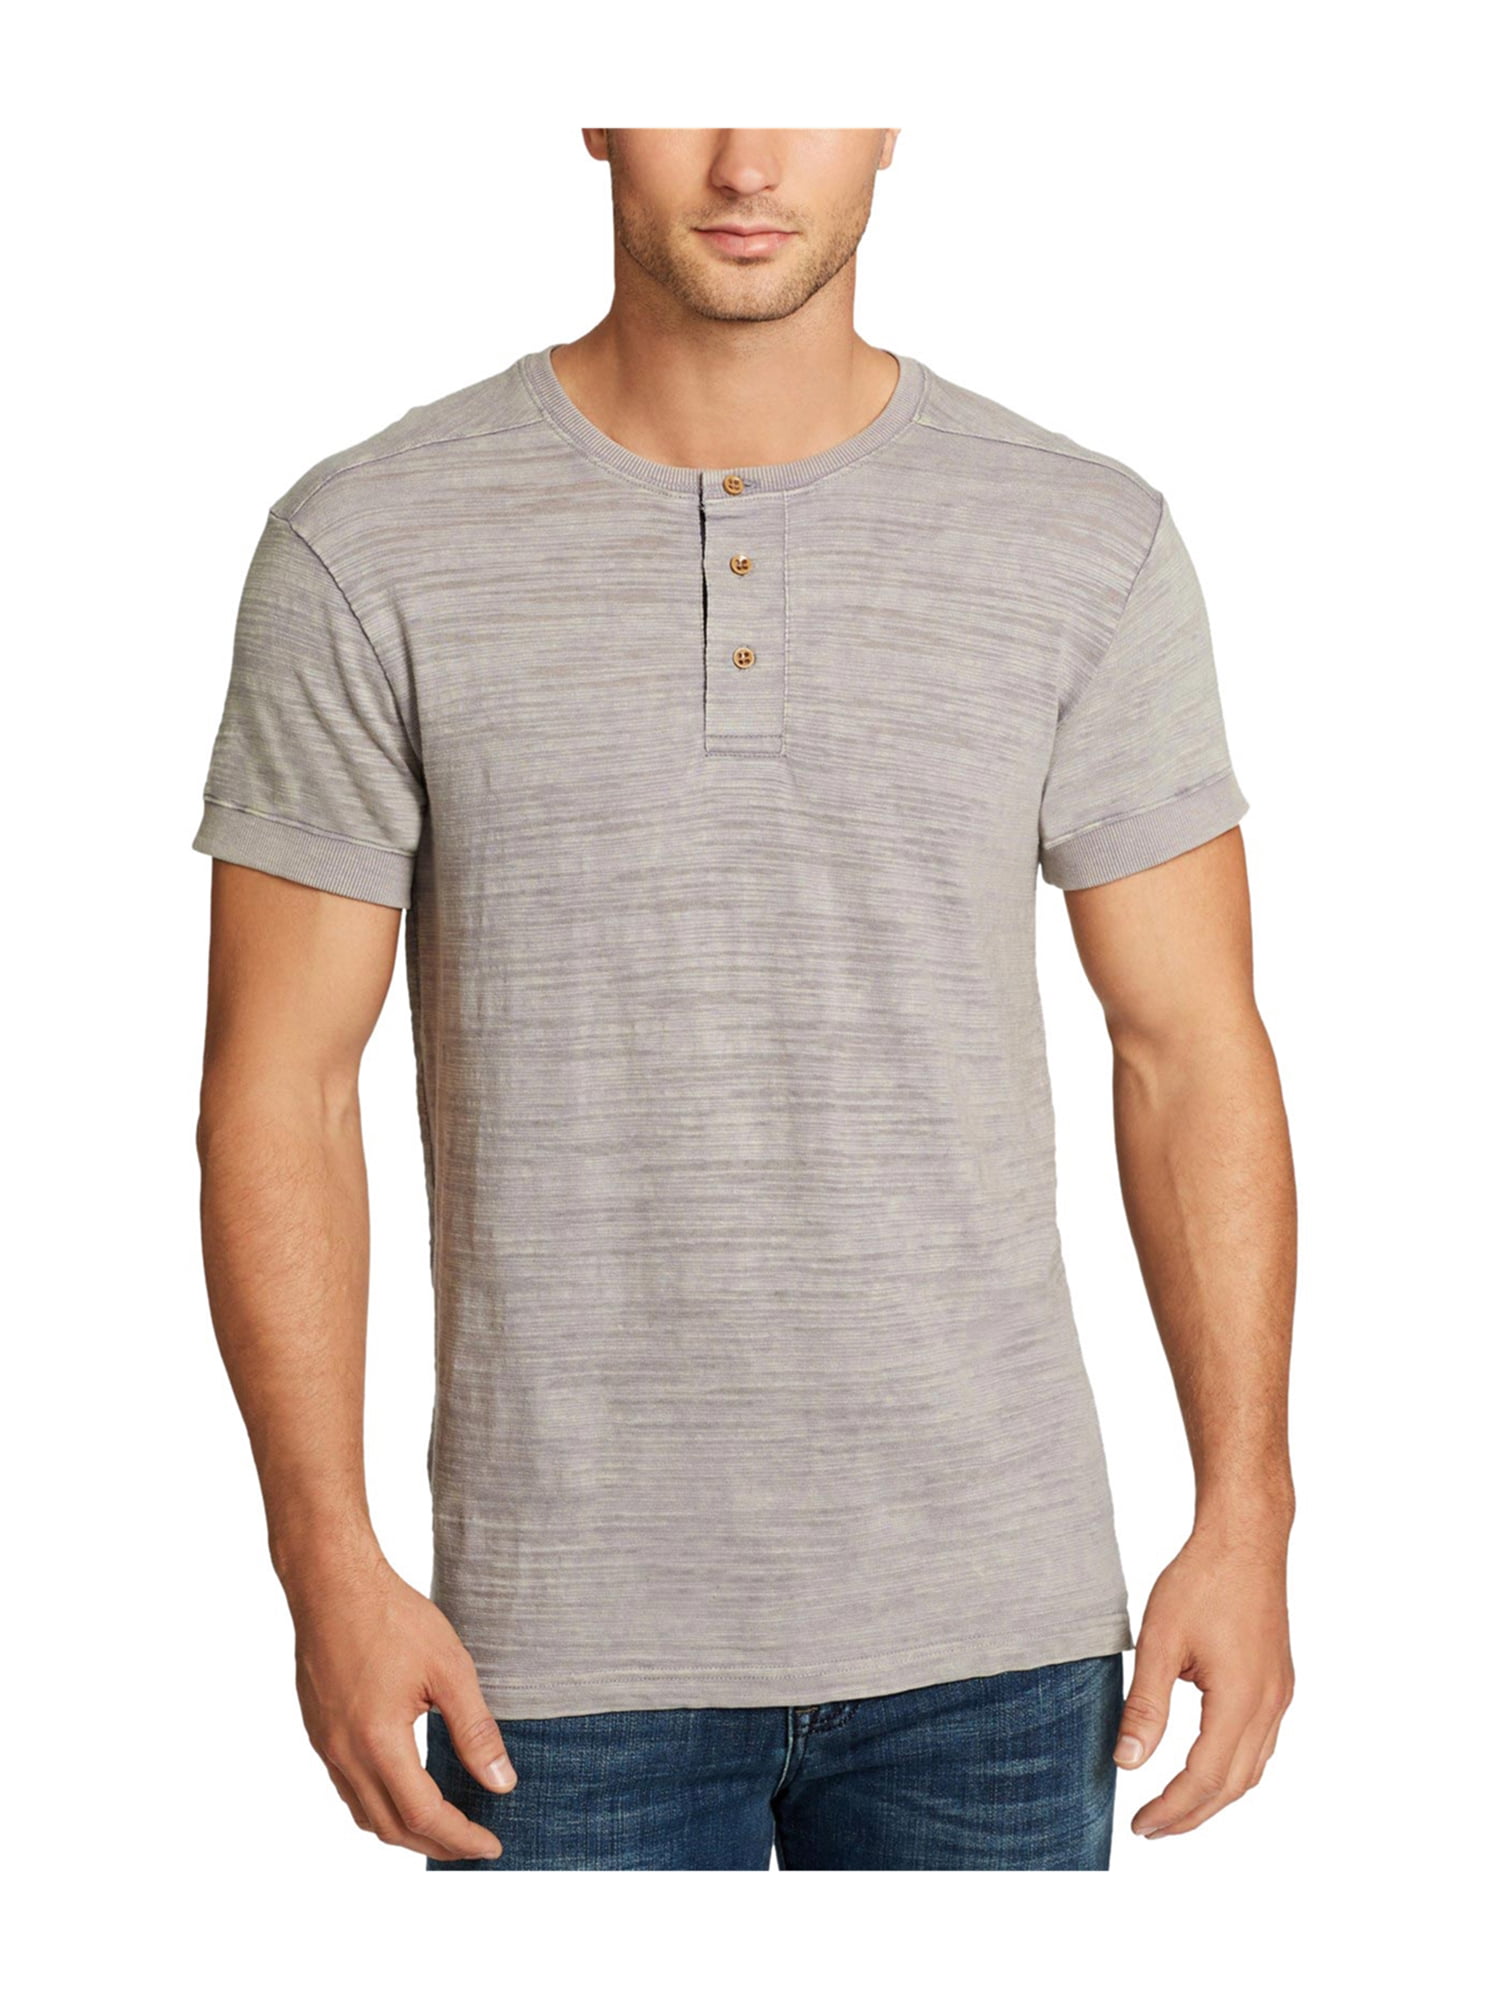 William Rast Mens Heathered Henley Shirt, Grey, Large - Walmart.com